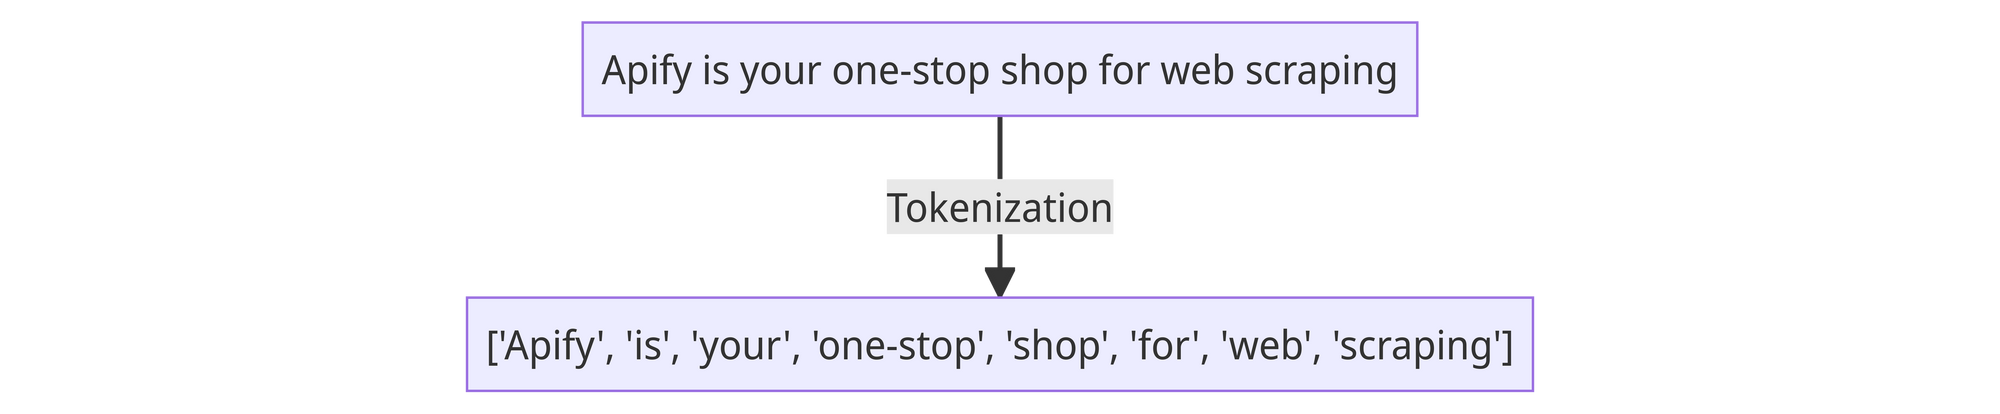 Tokenization example